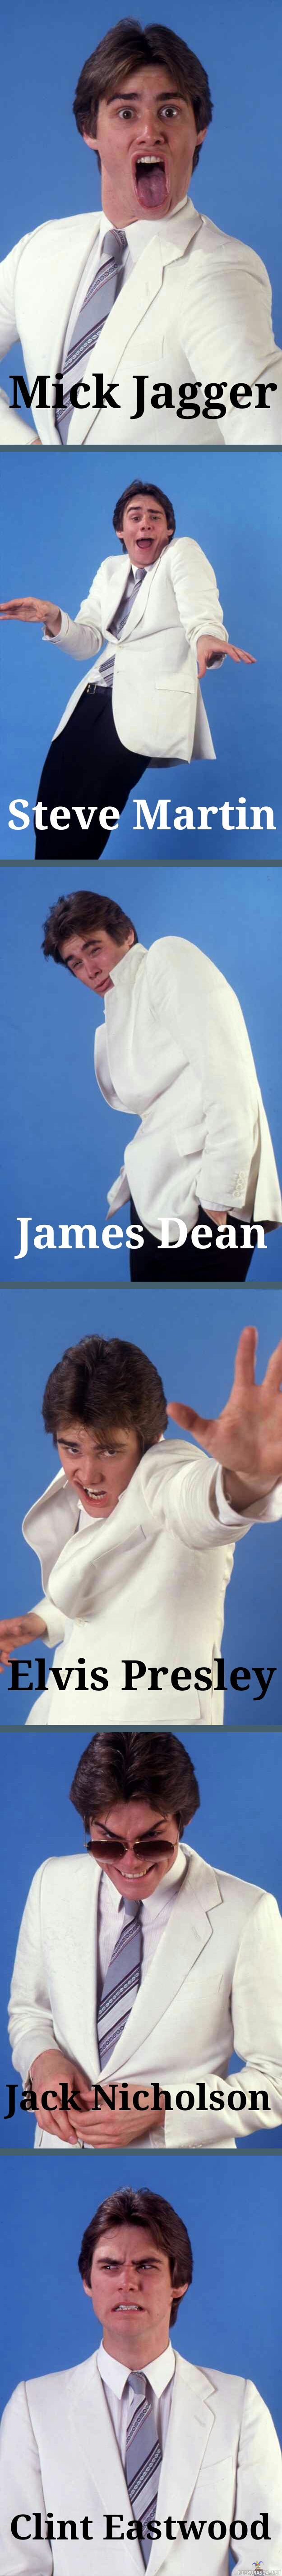 Jim Carrey - Kokoelma Jim Carreyn naamaimitaatioista 90-luvun alkupuolelta.